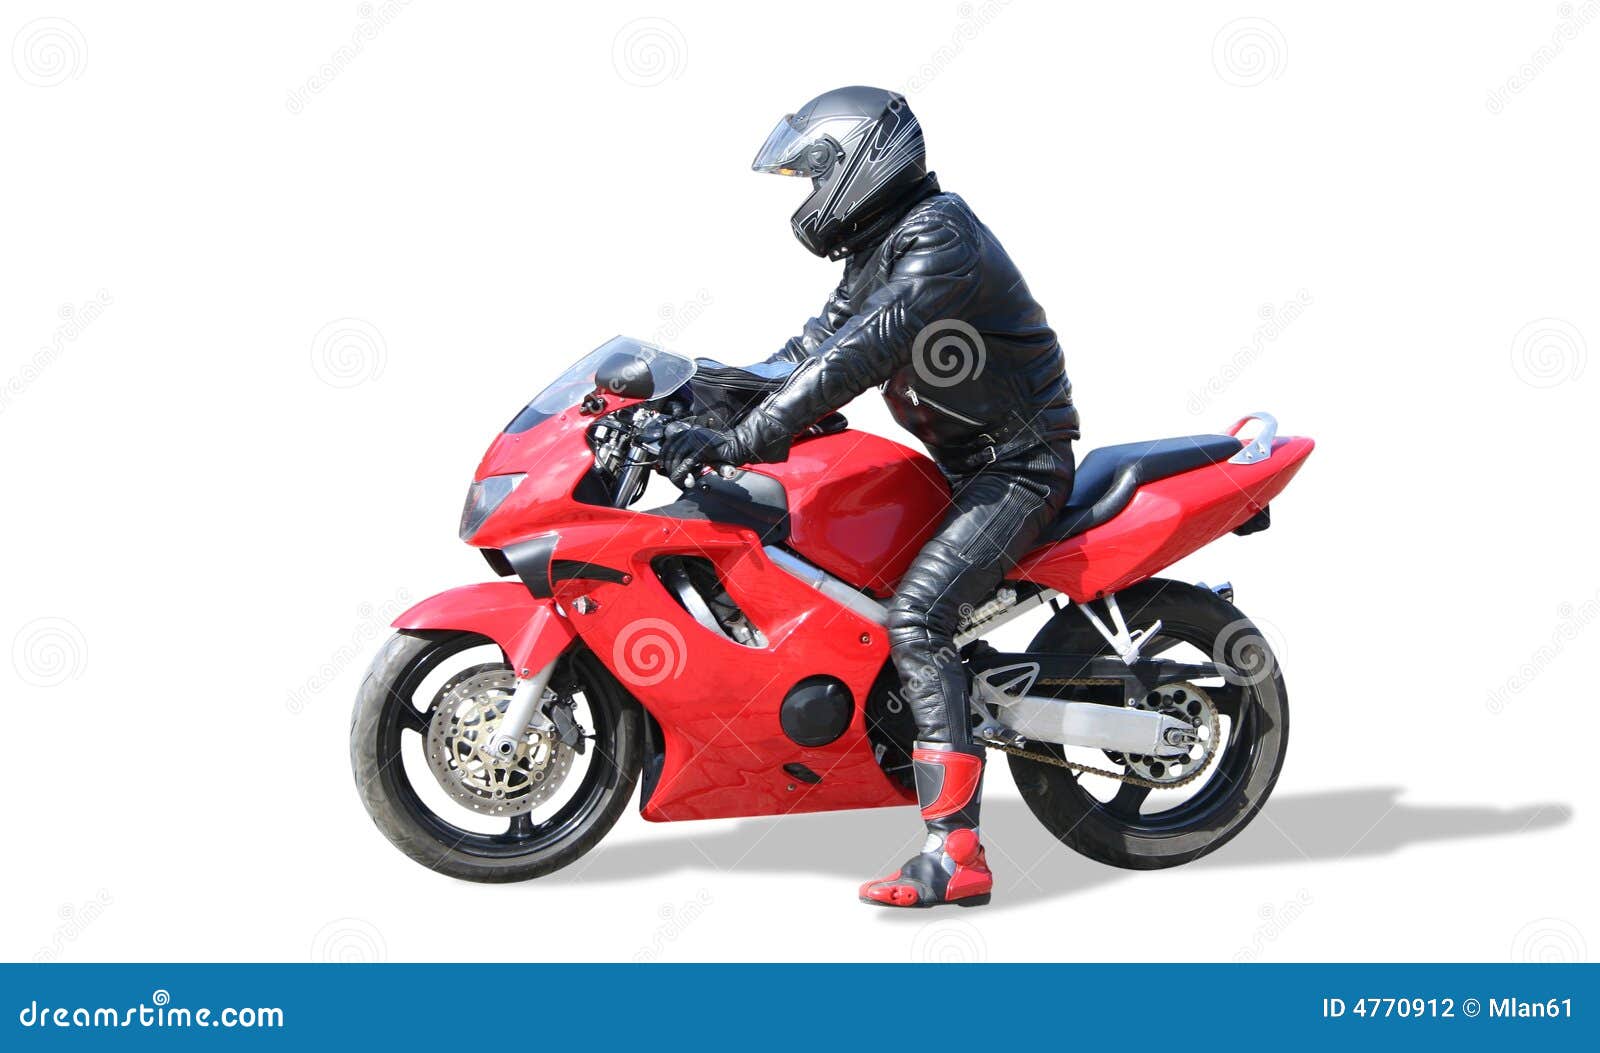 motorcyclist-4770912.jpg